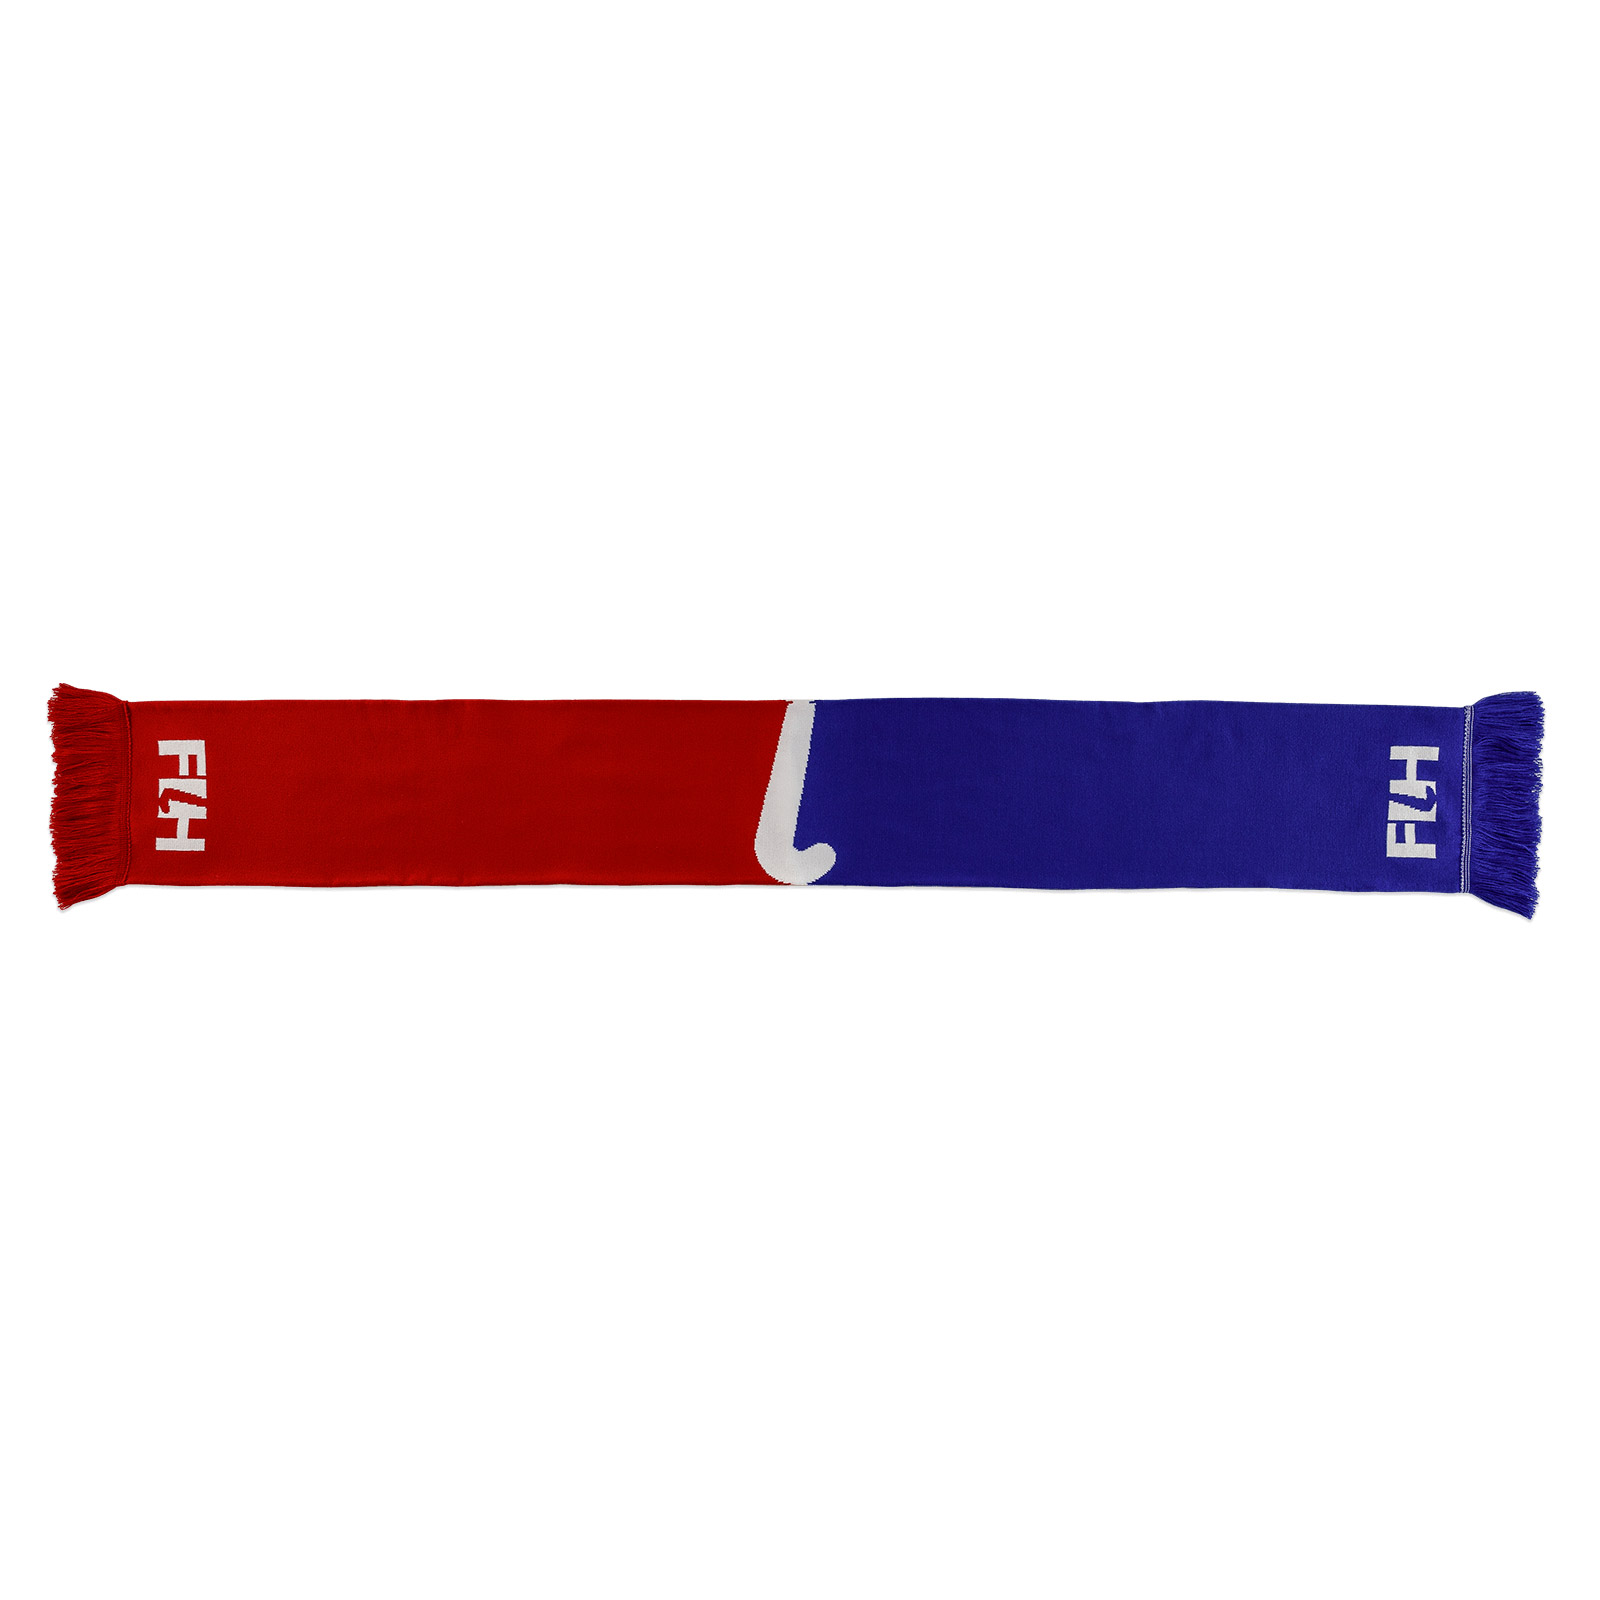 Scarf, reversible, Red/Blue - Motive FIH Hockey Stick